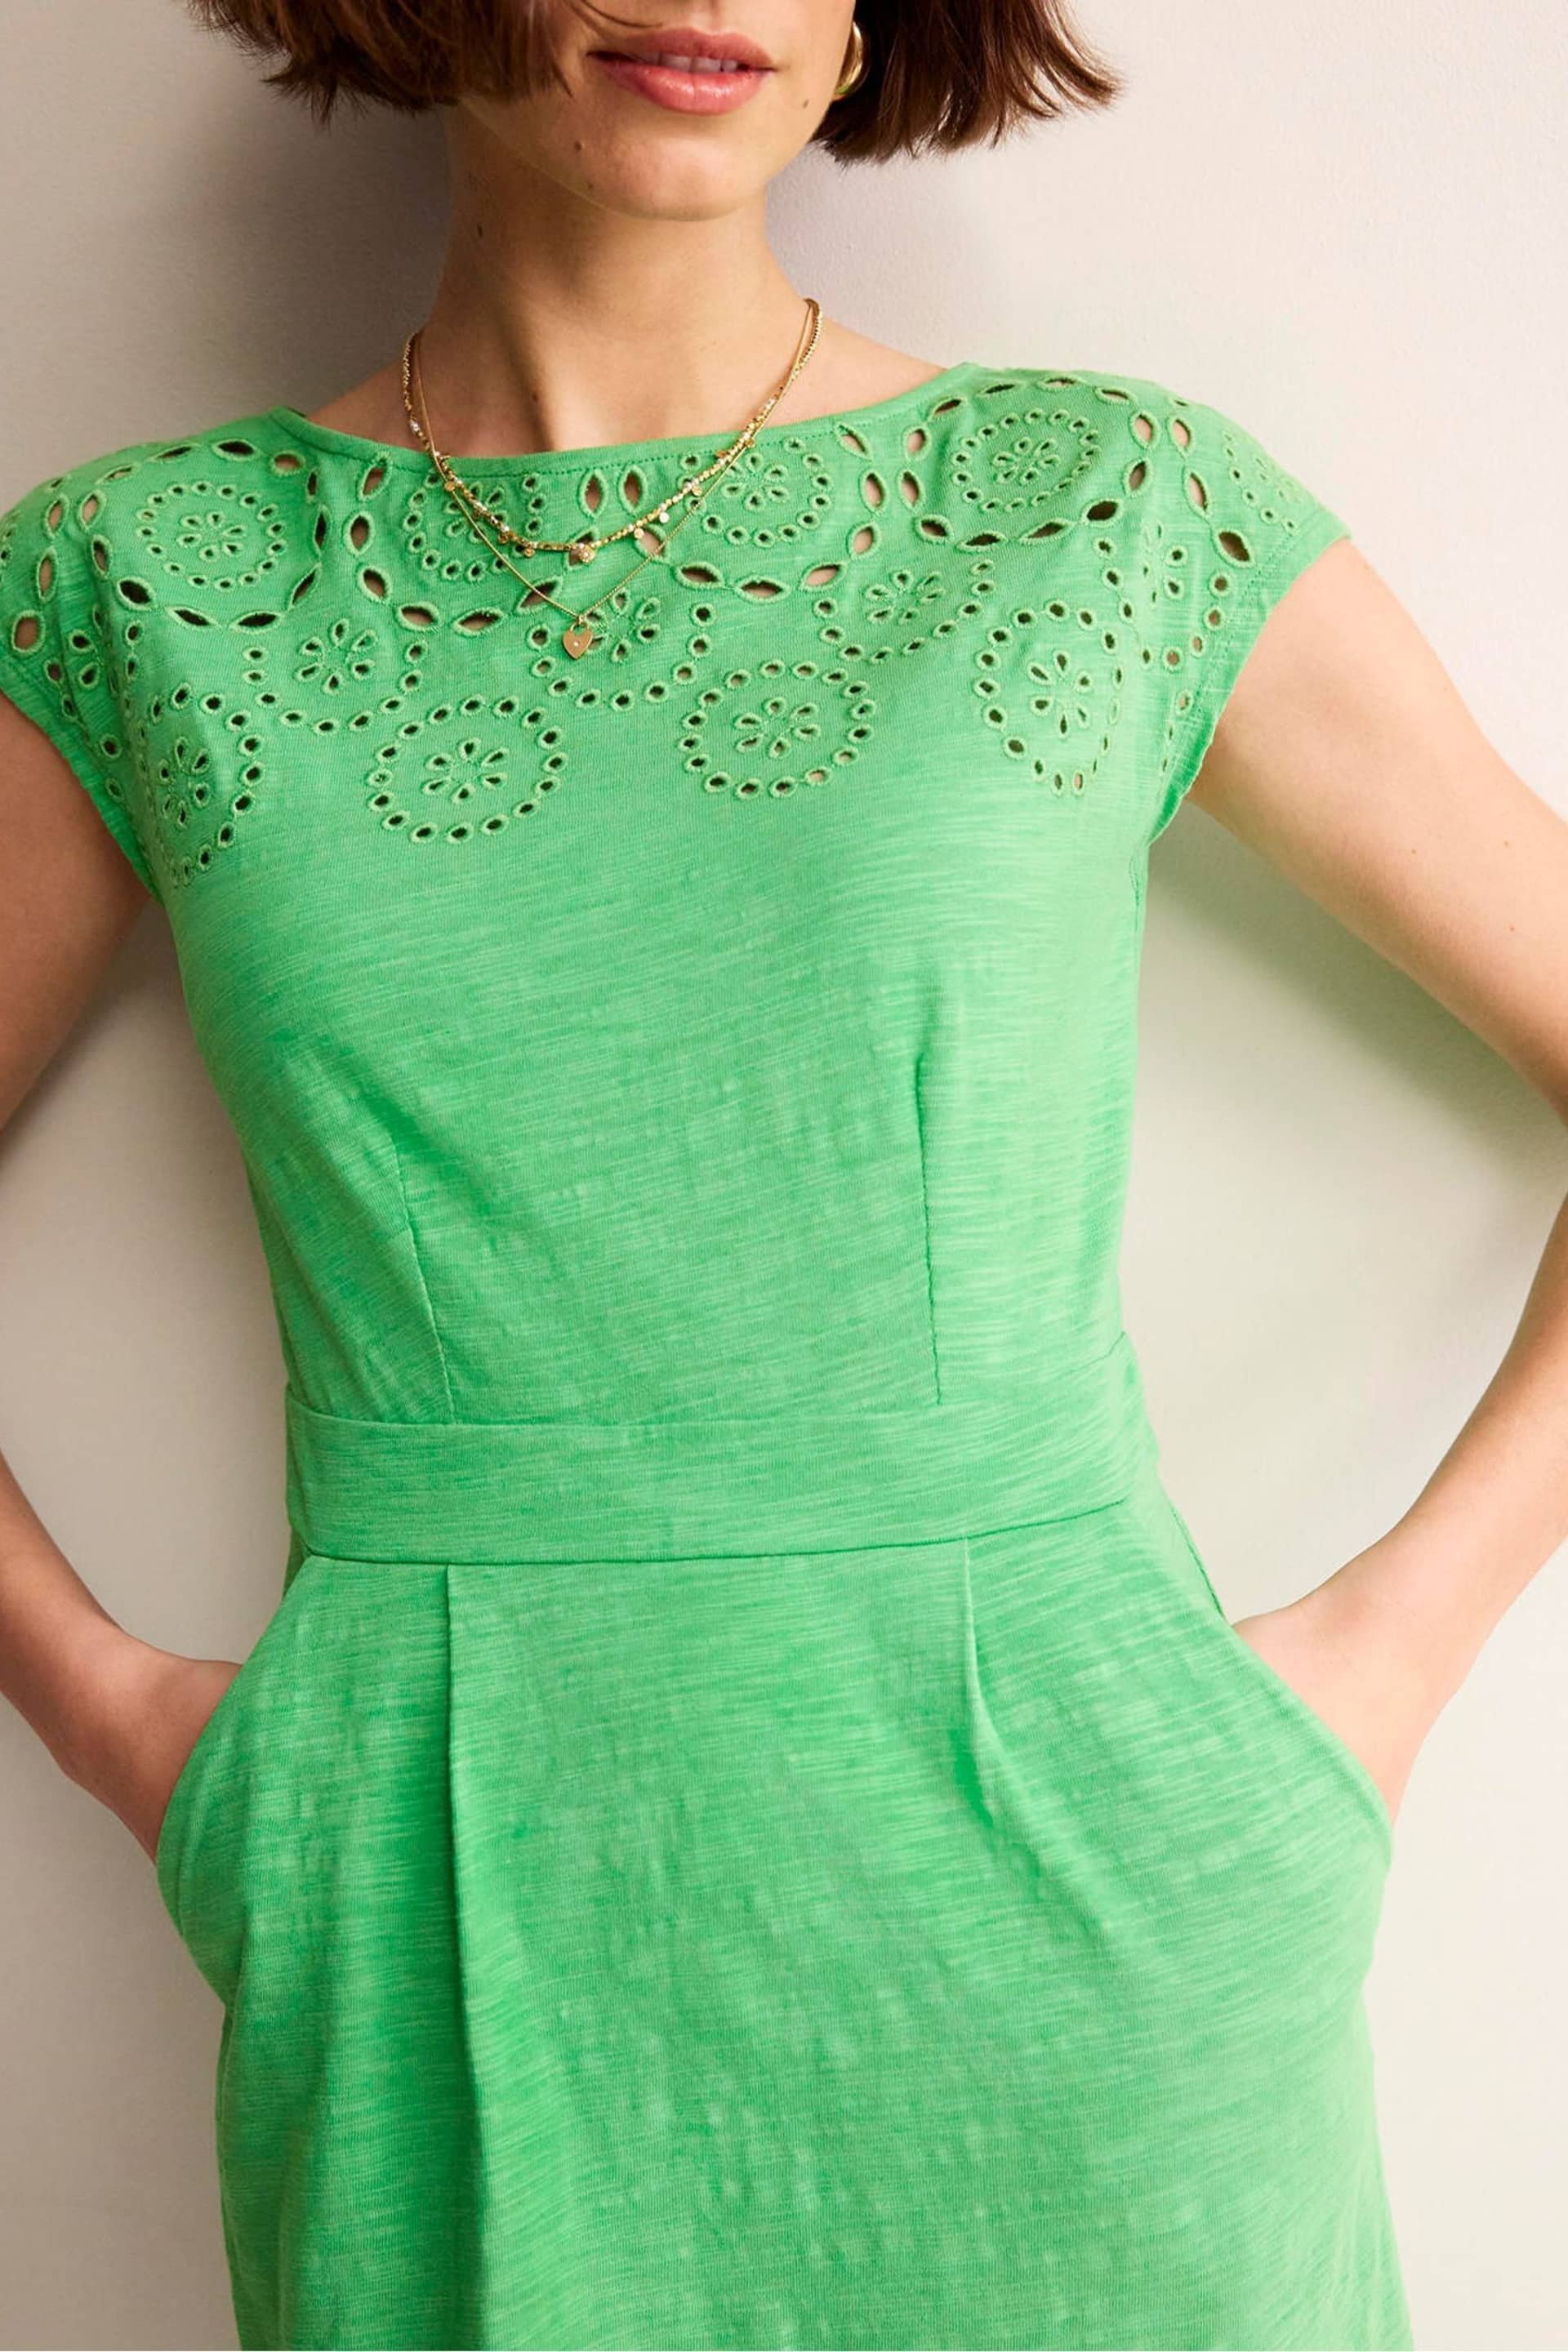 Boden Green Petite Florrie Broderie Jersey Dress - Image 2 of 5